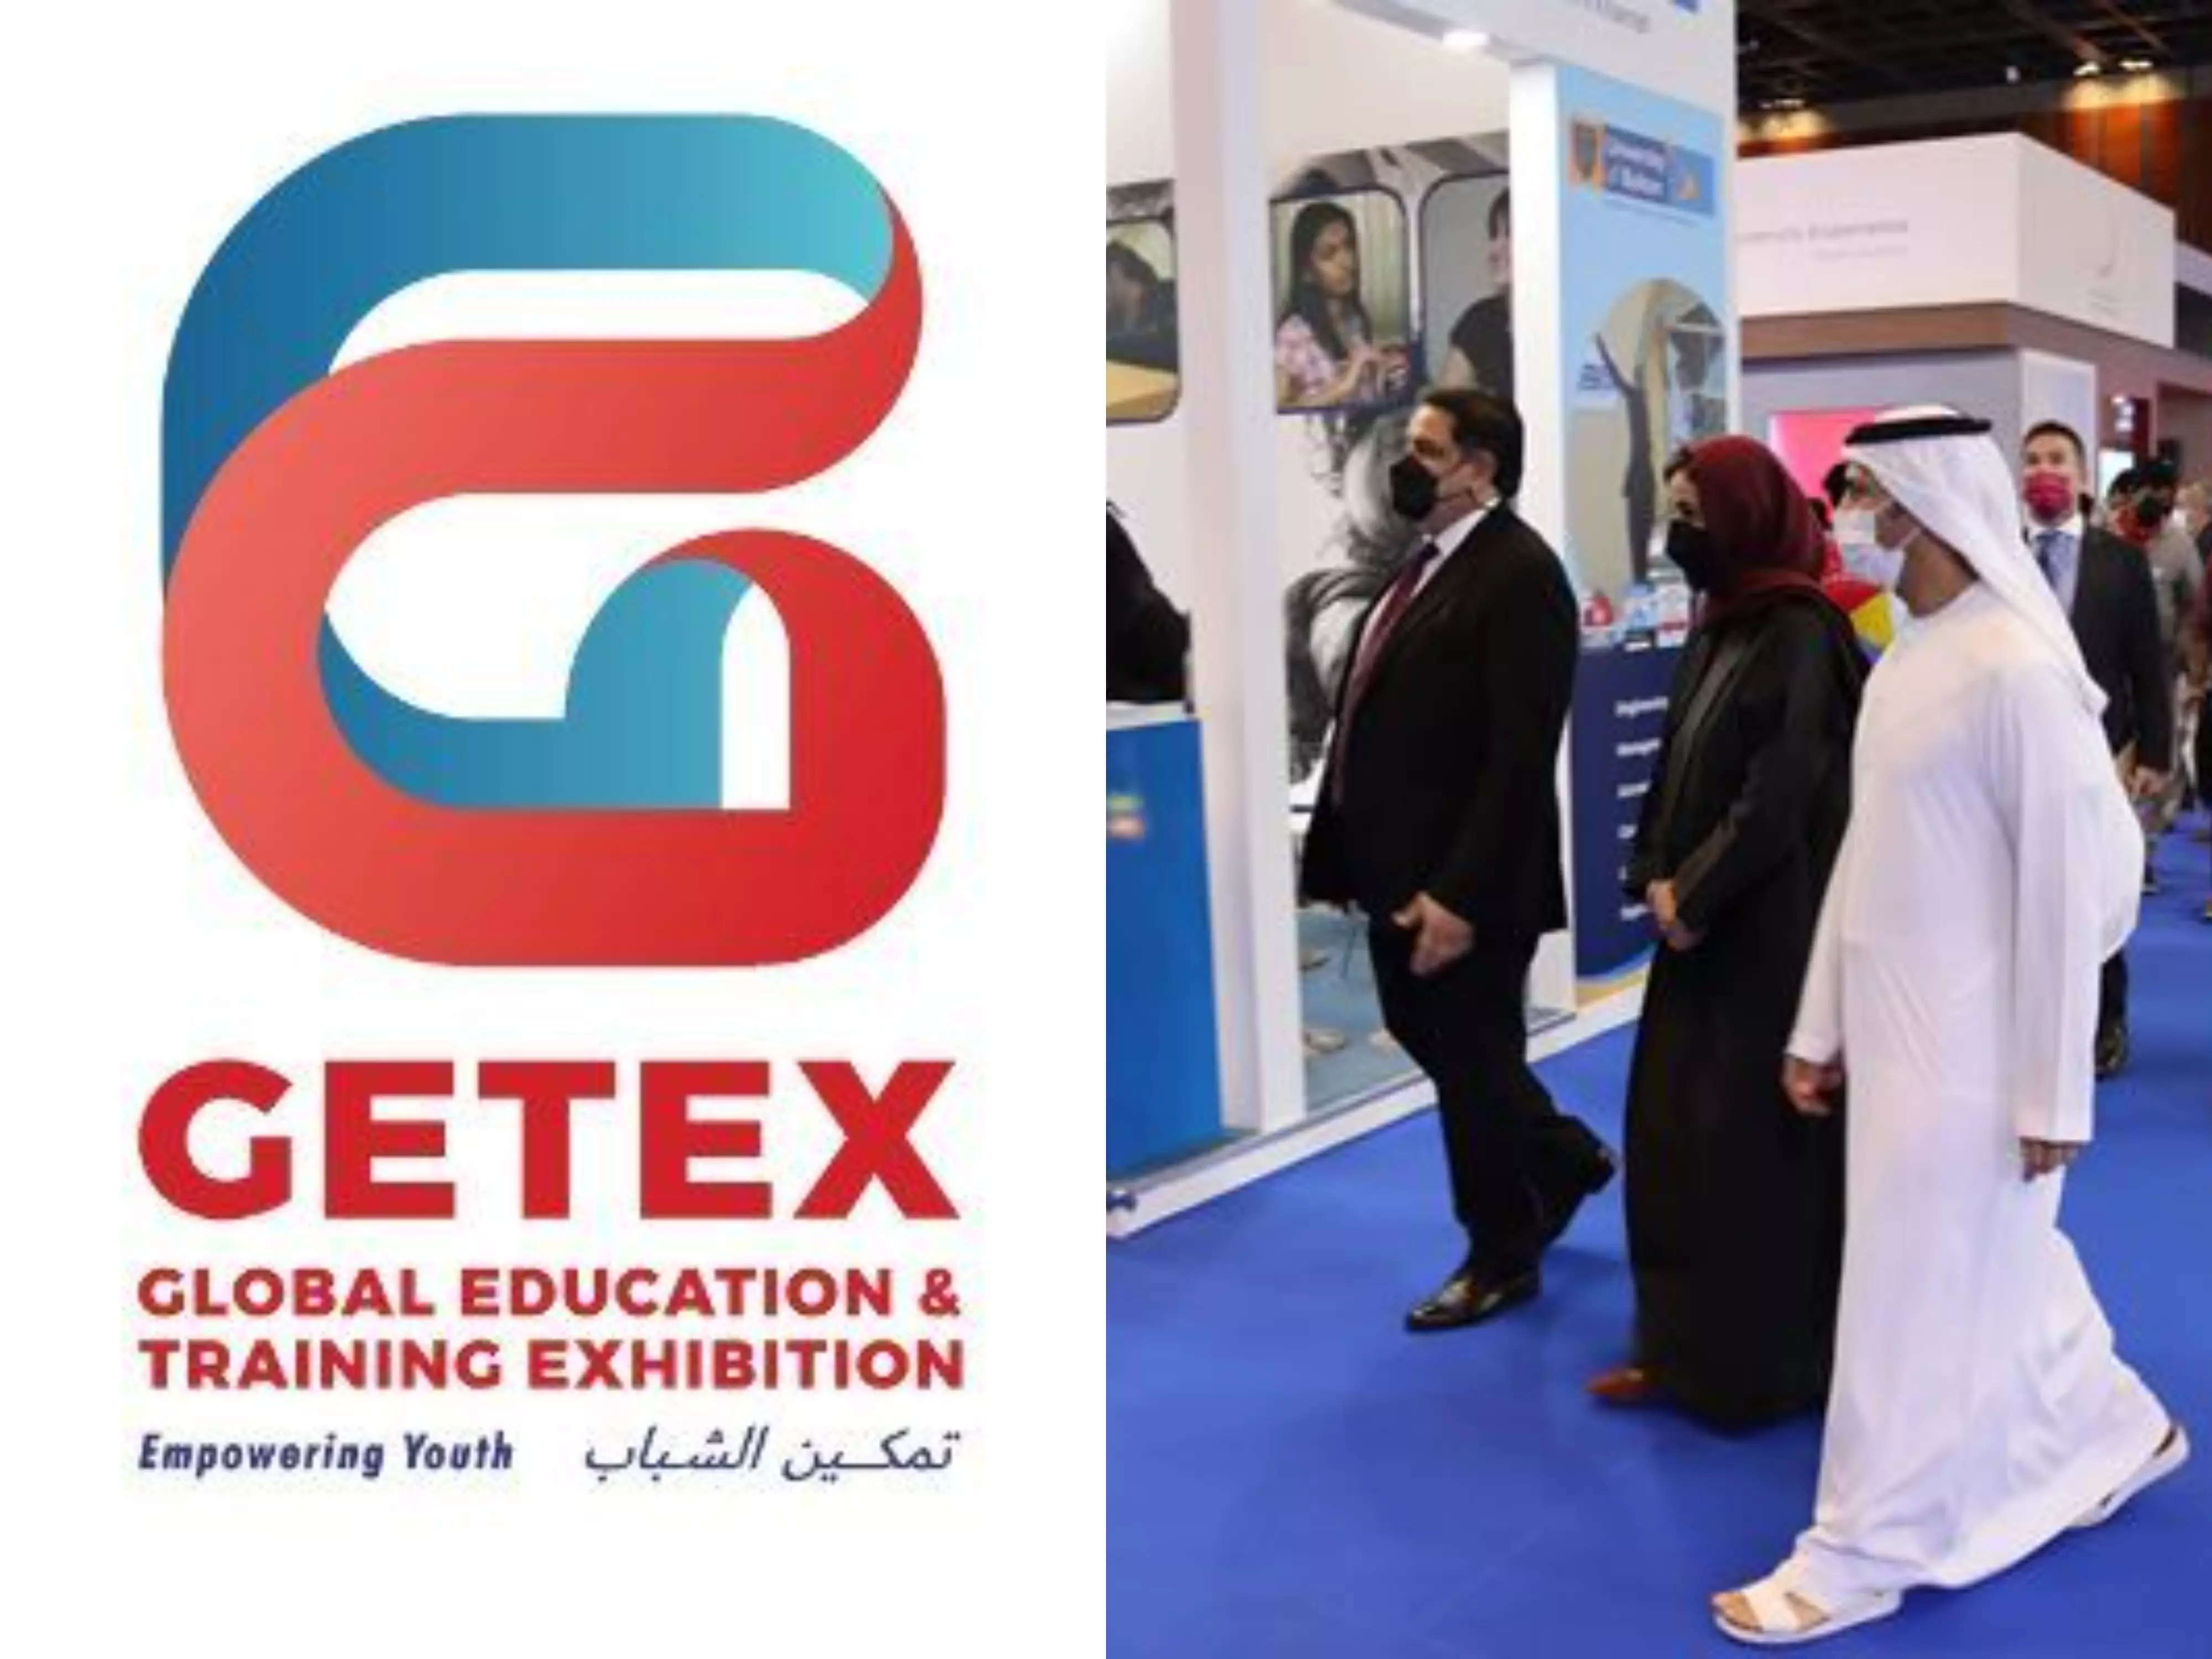 GETEX will be held in Dubai on June 18-19